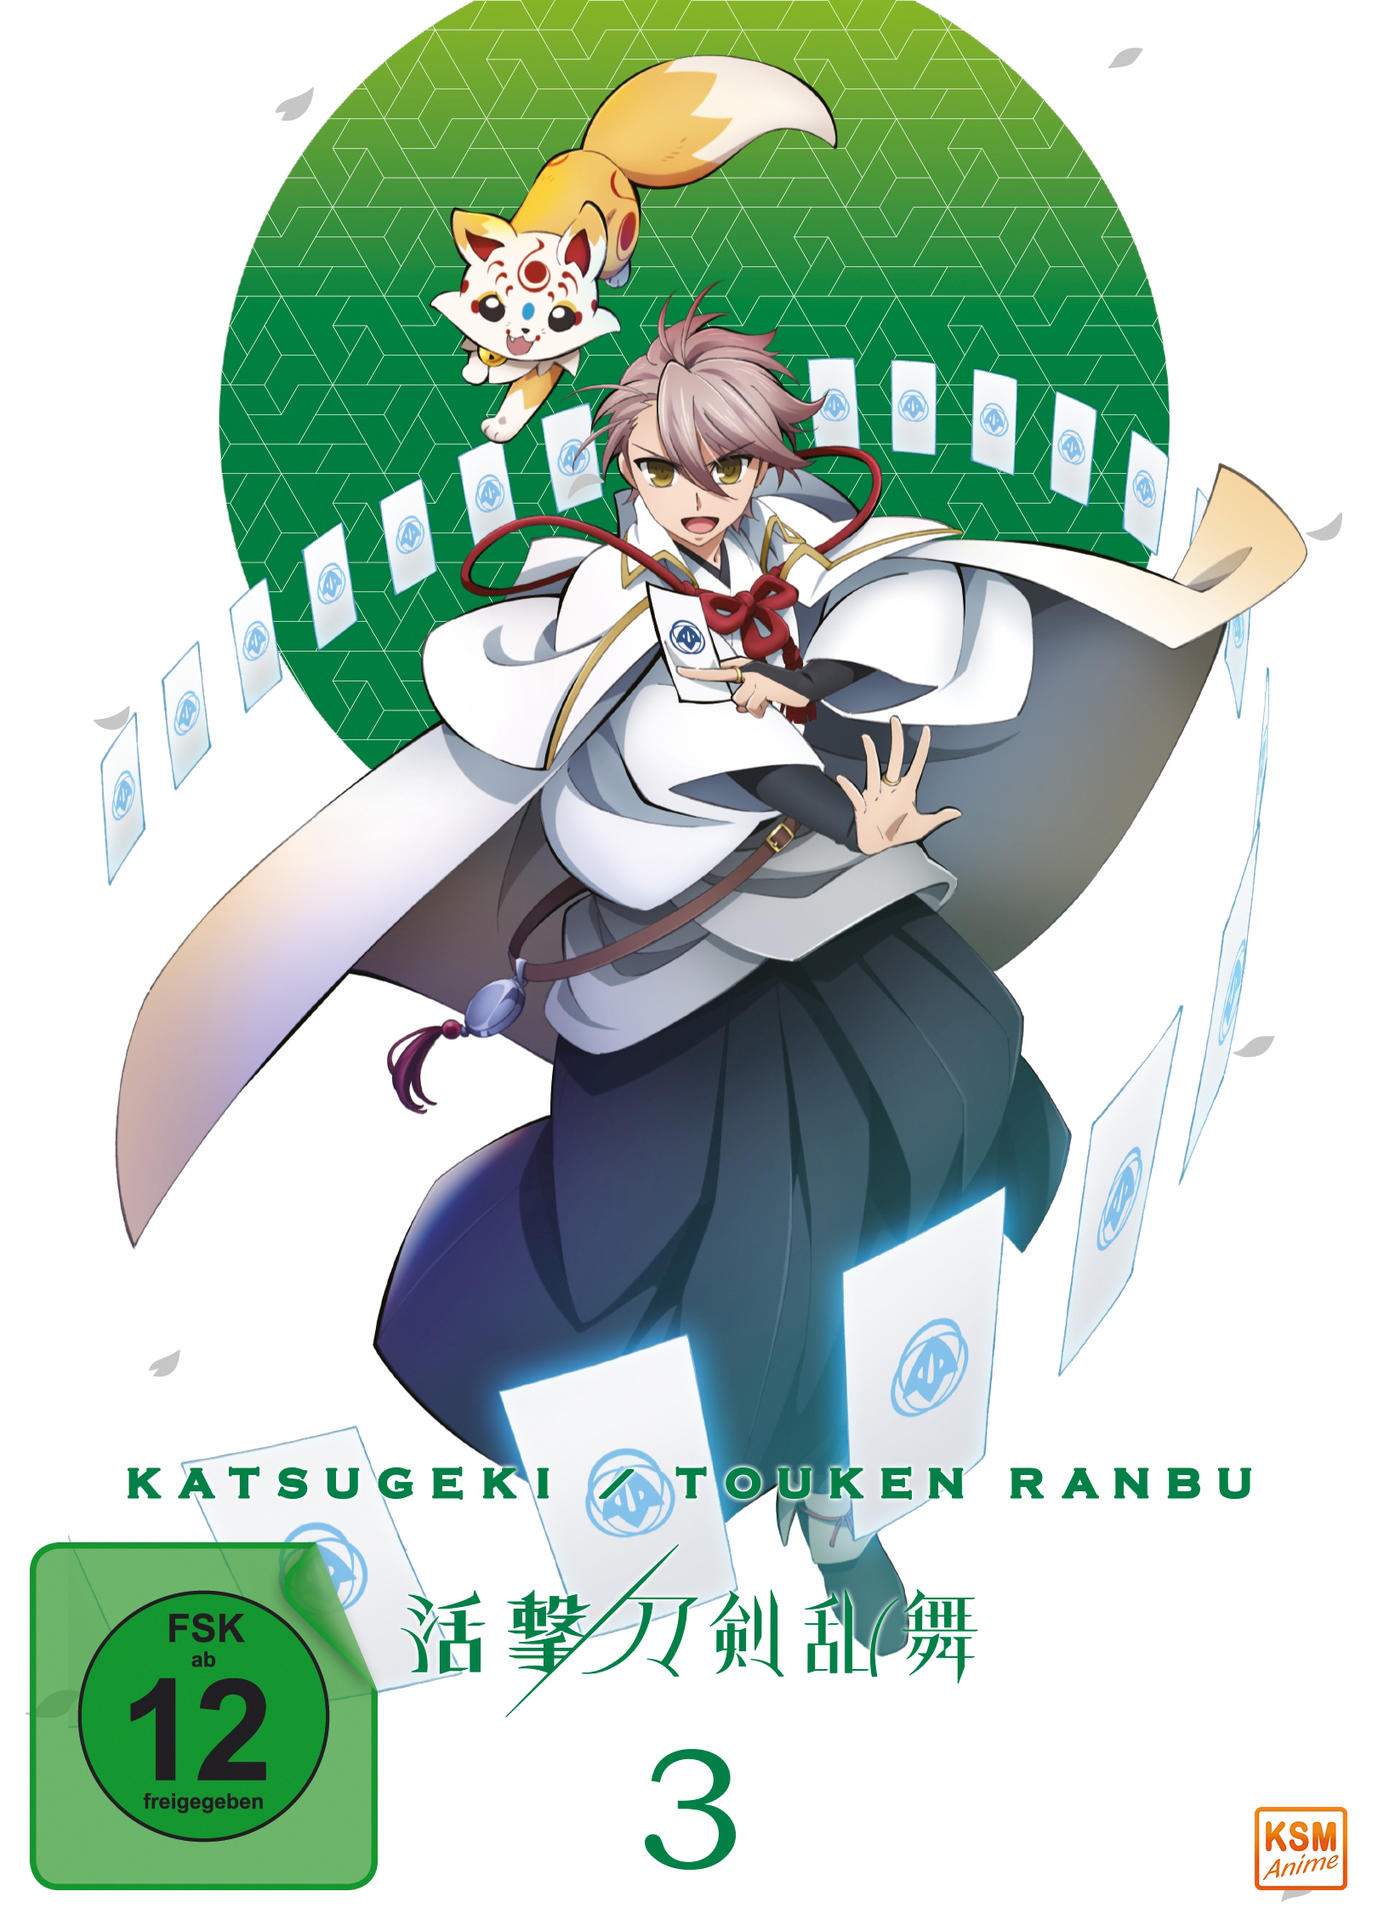 Katsugeki Touken Ranbu Episode 3 9-13 - DVD Volume 